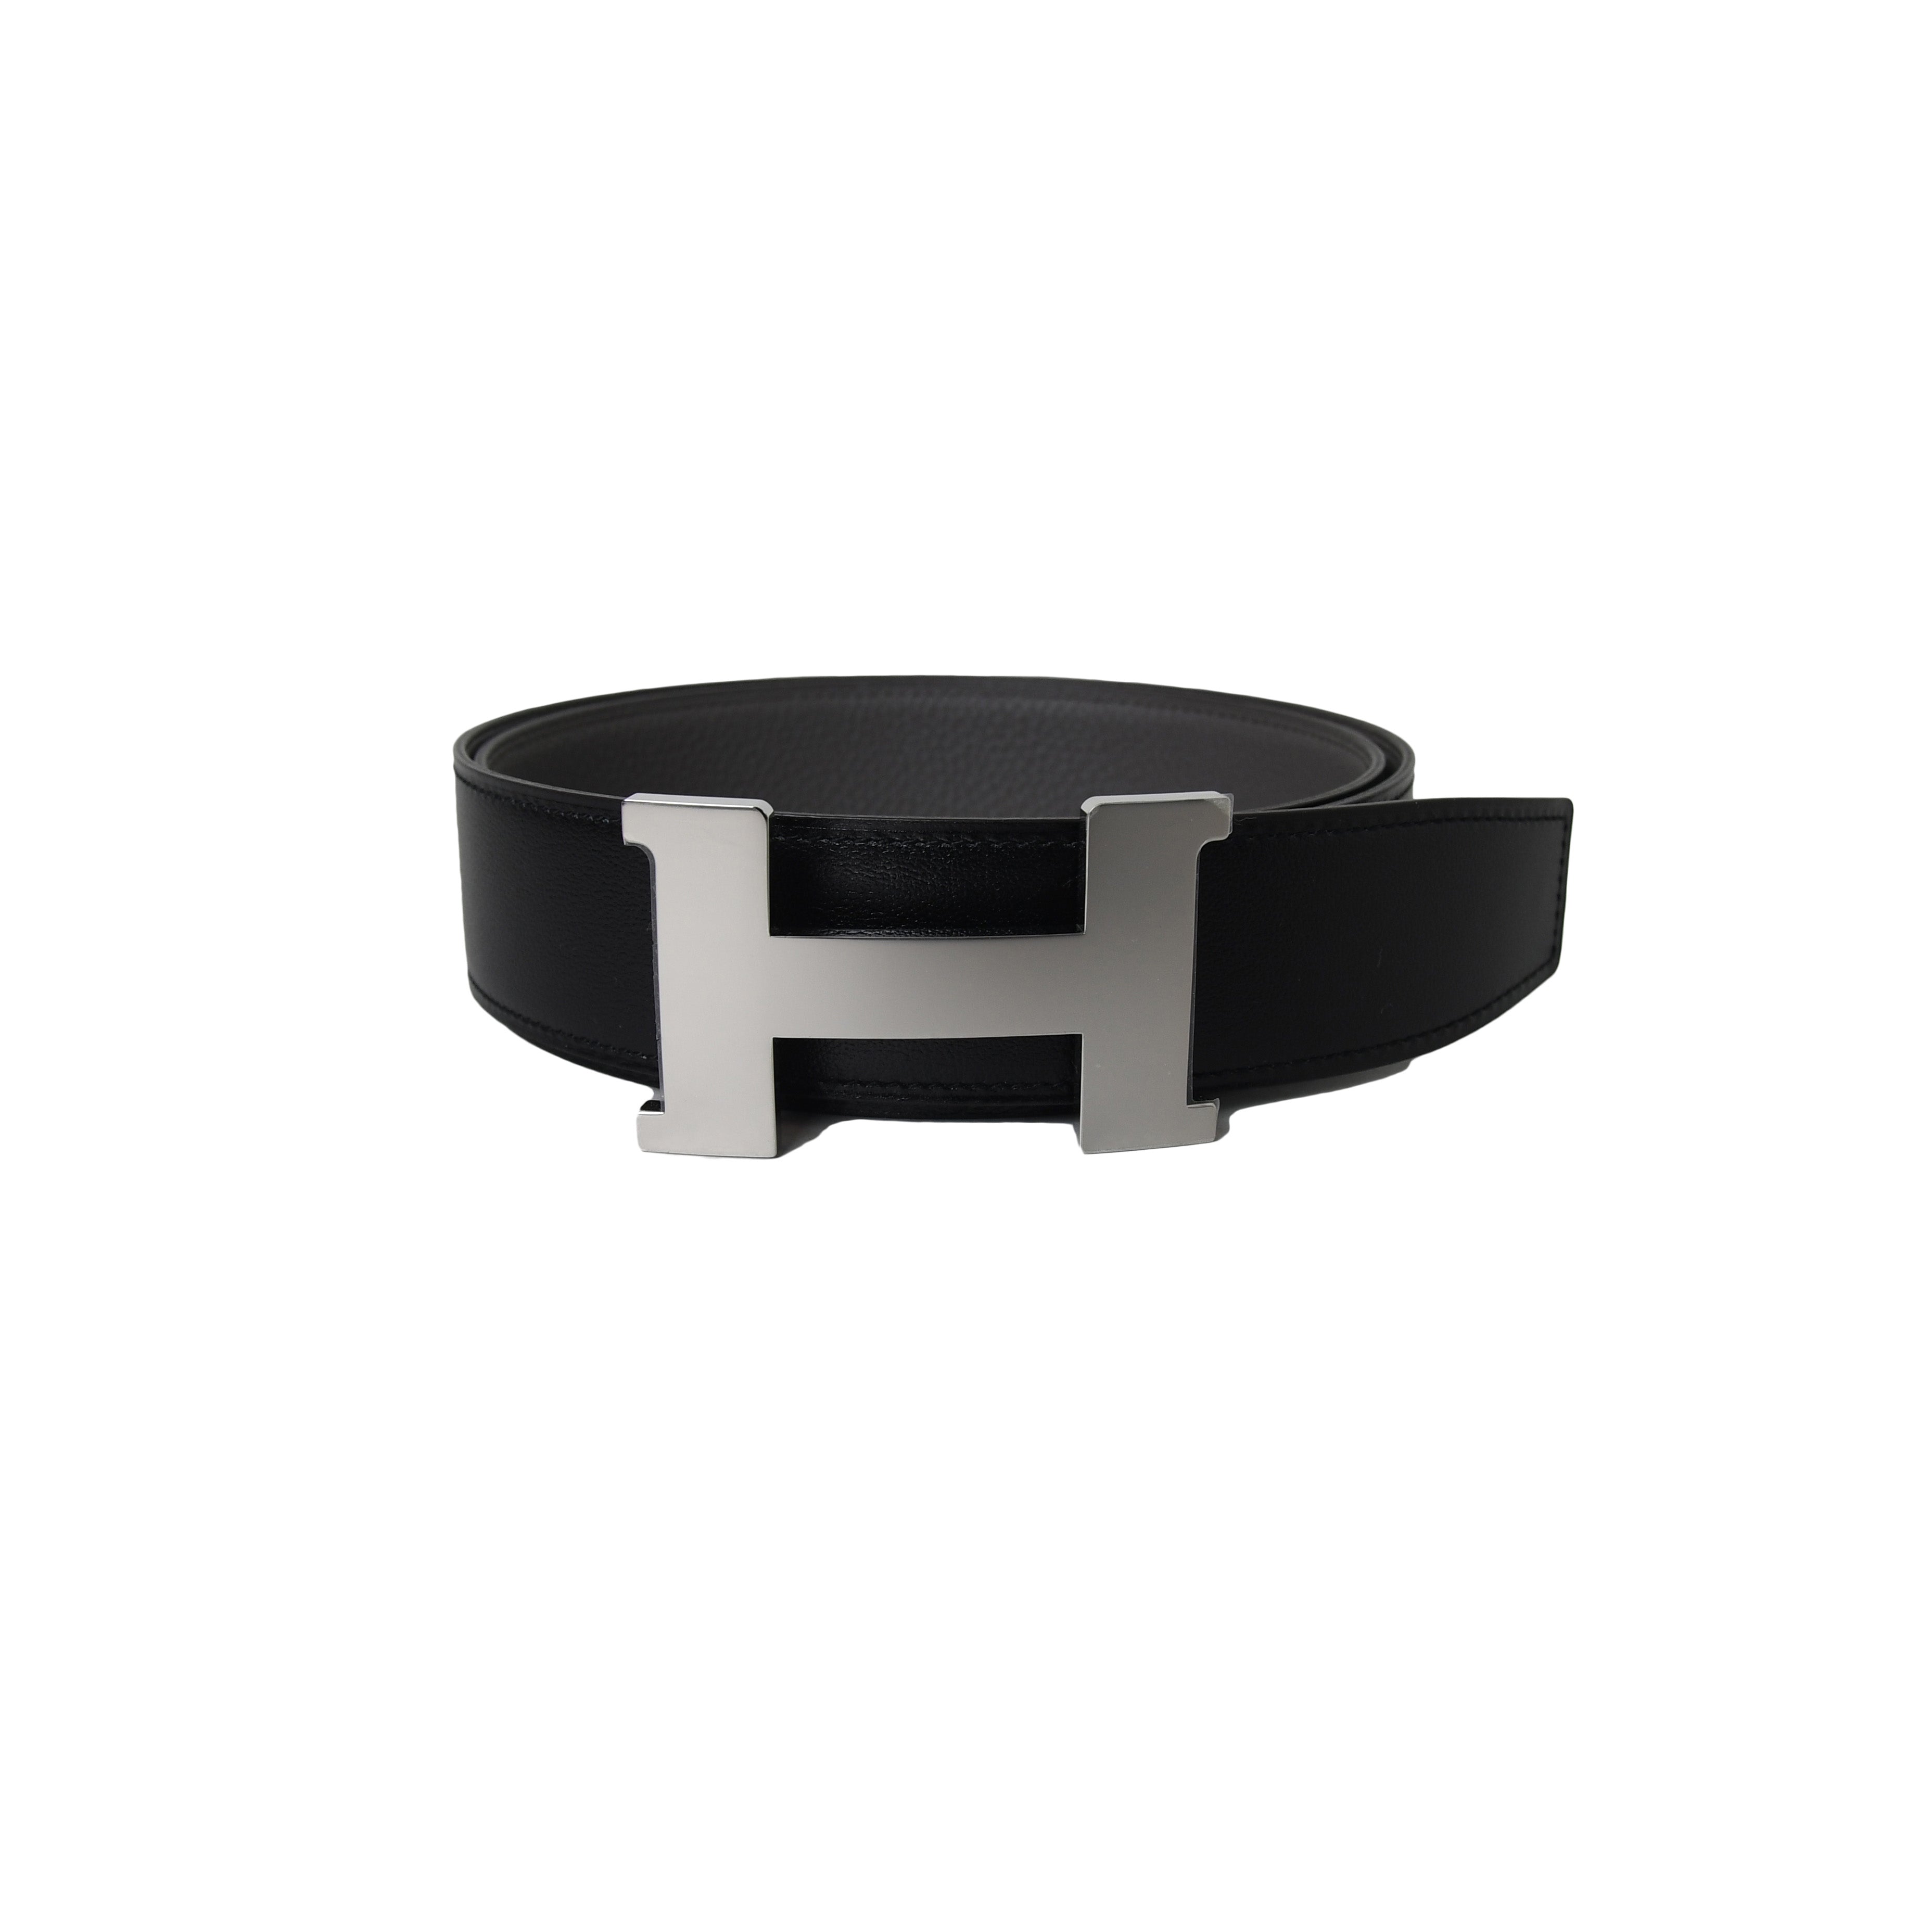 Hermes Black/Bleu Jean Box and Togo Leather Palladium Finish Reversible H  Buckle Belt 90 CM Hermes